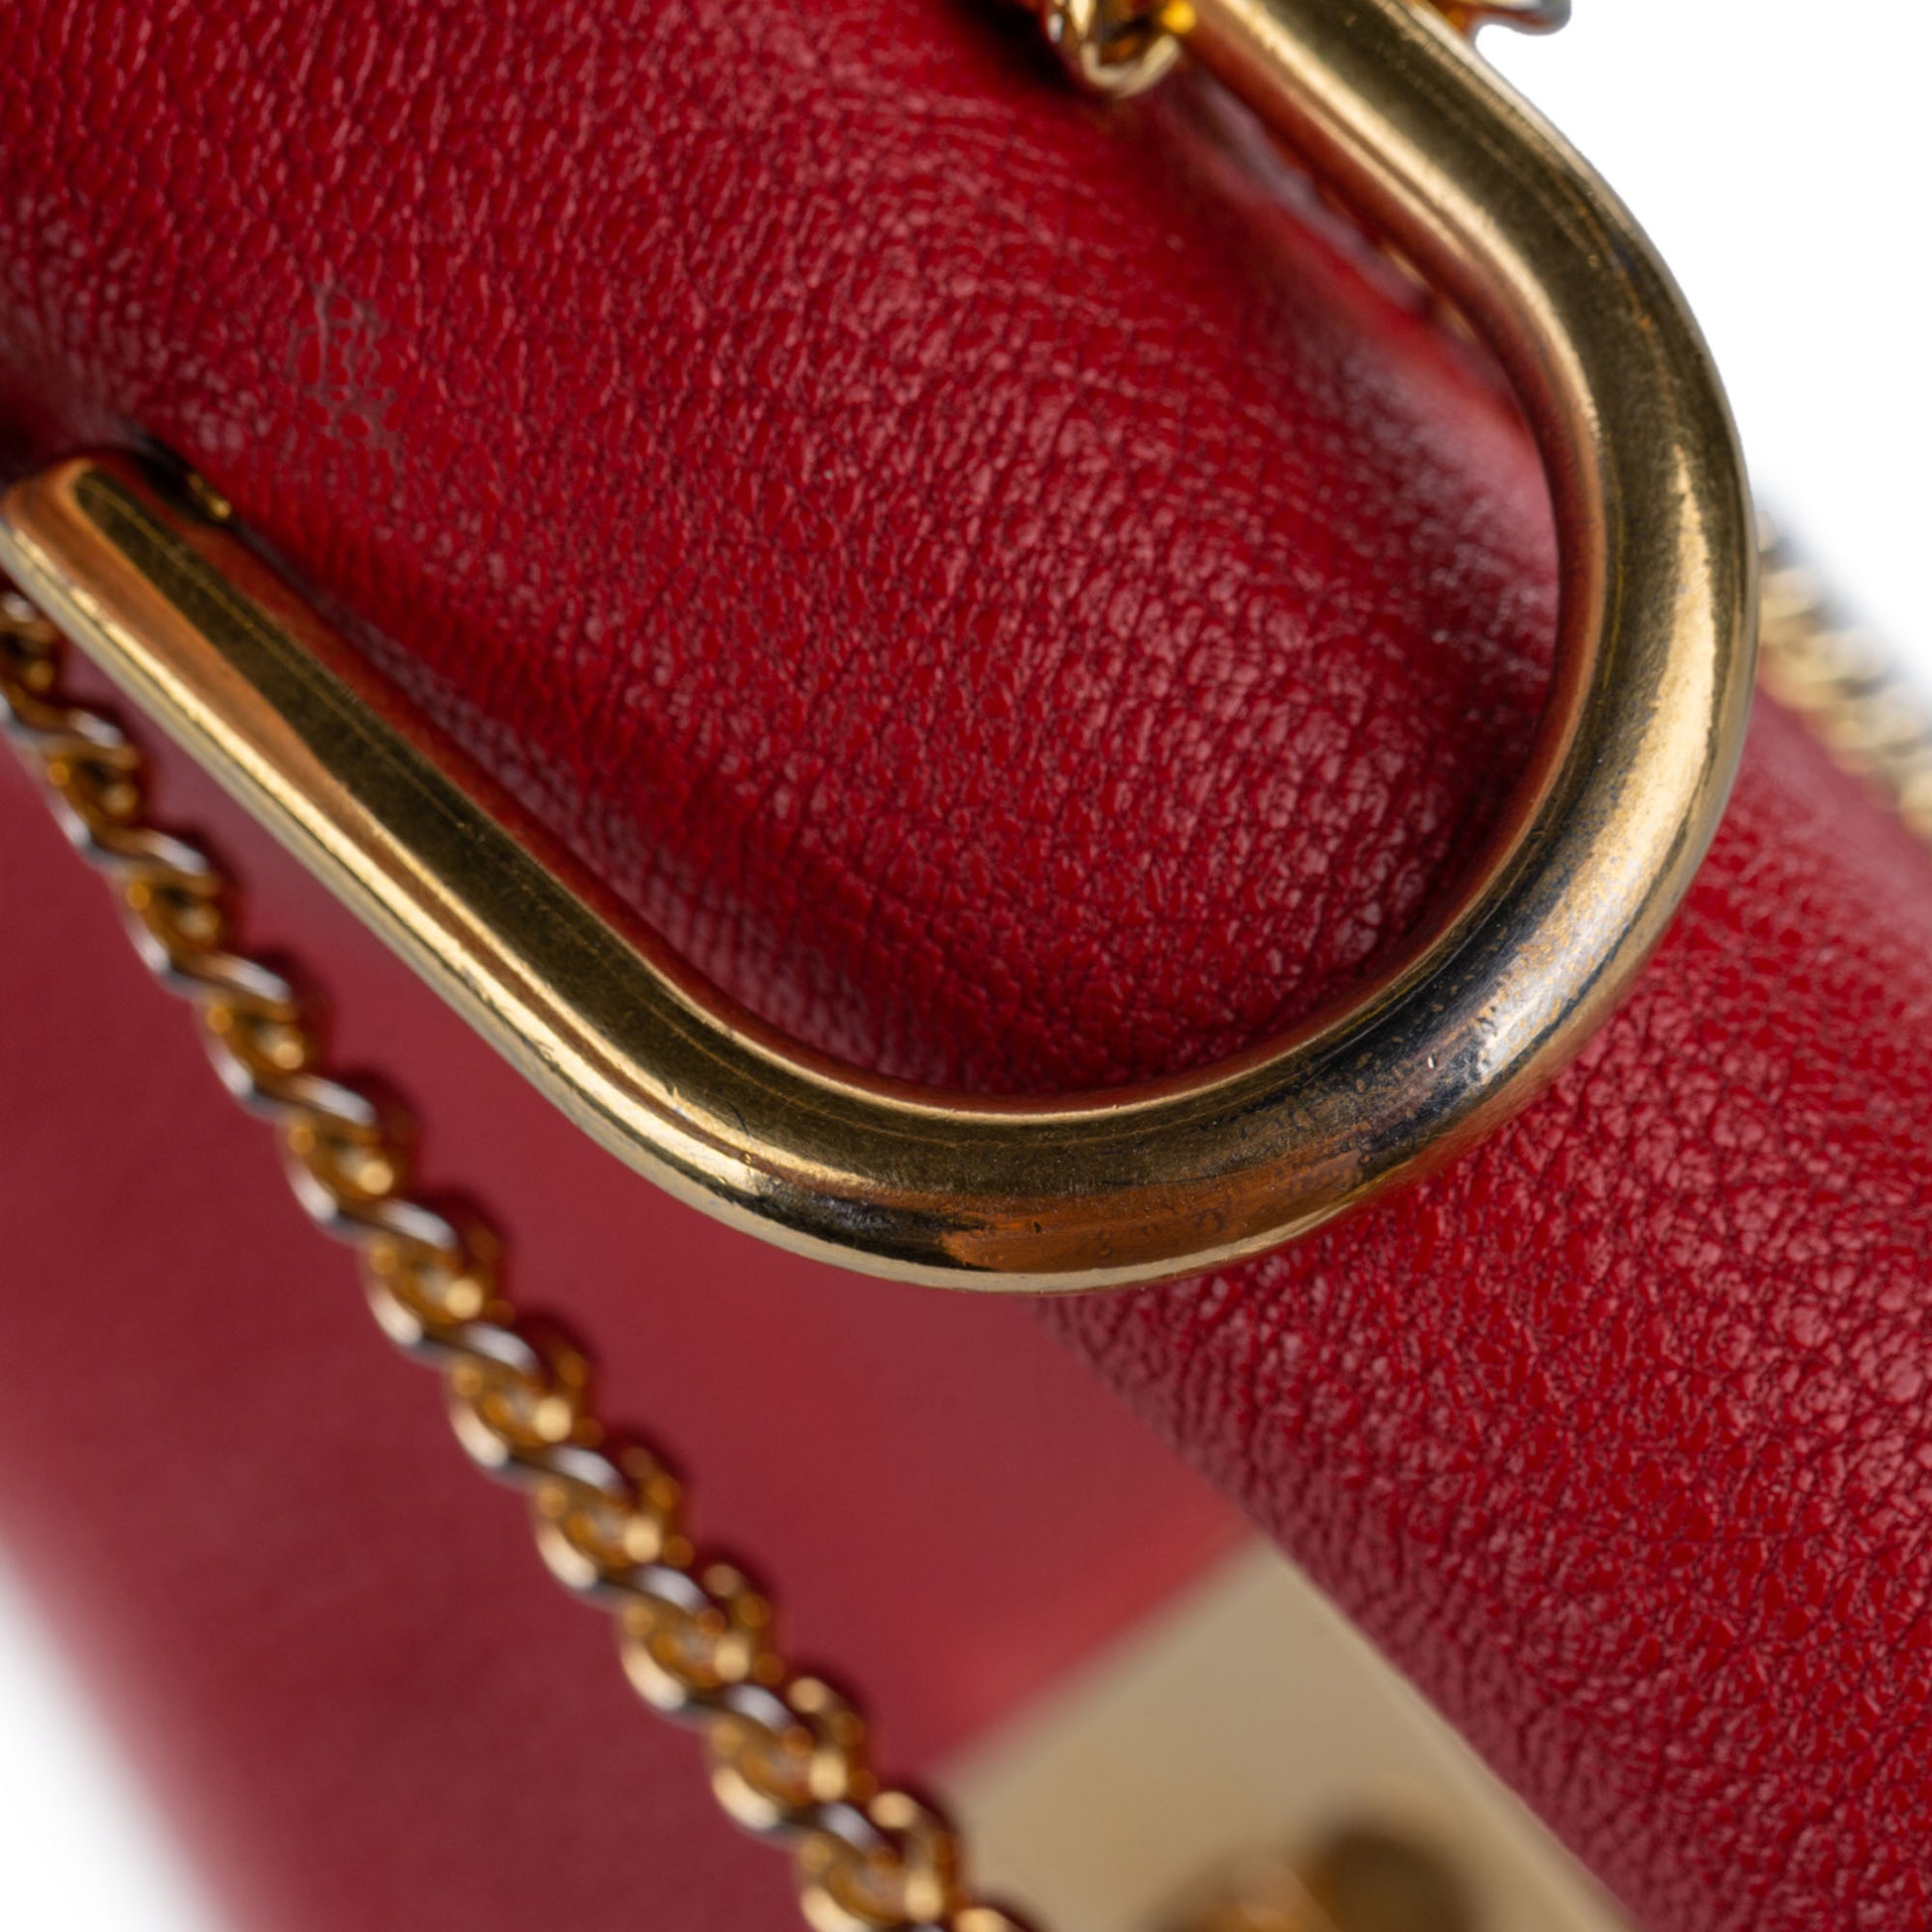 Drew Leather Crossbody Bag Red - Gaby Paris